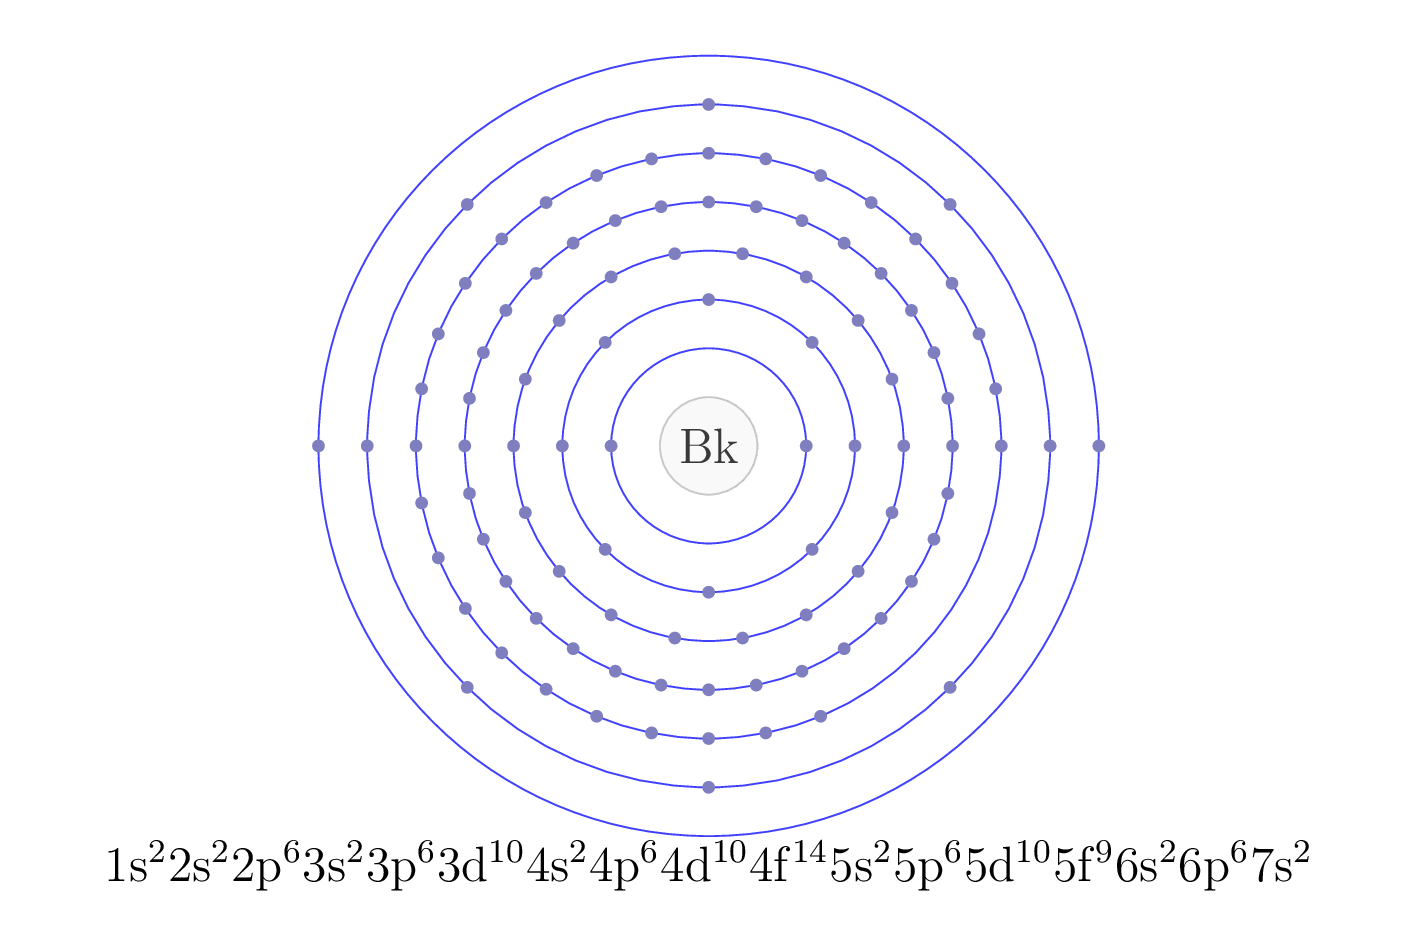 electron configuration of element Bk